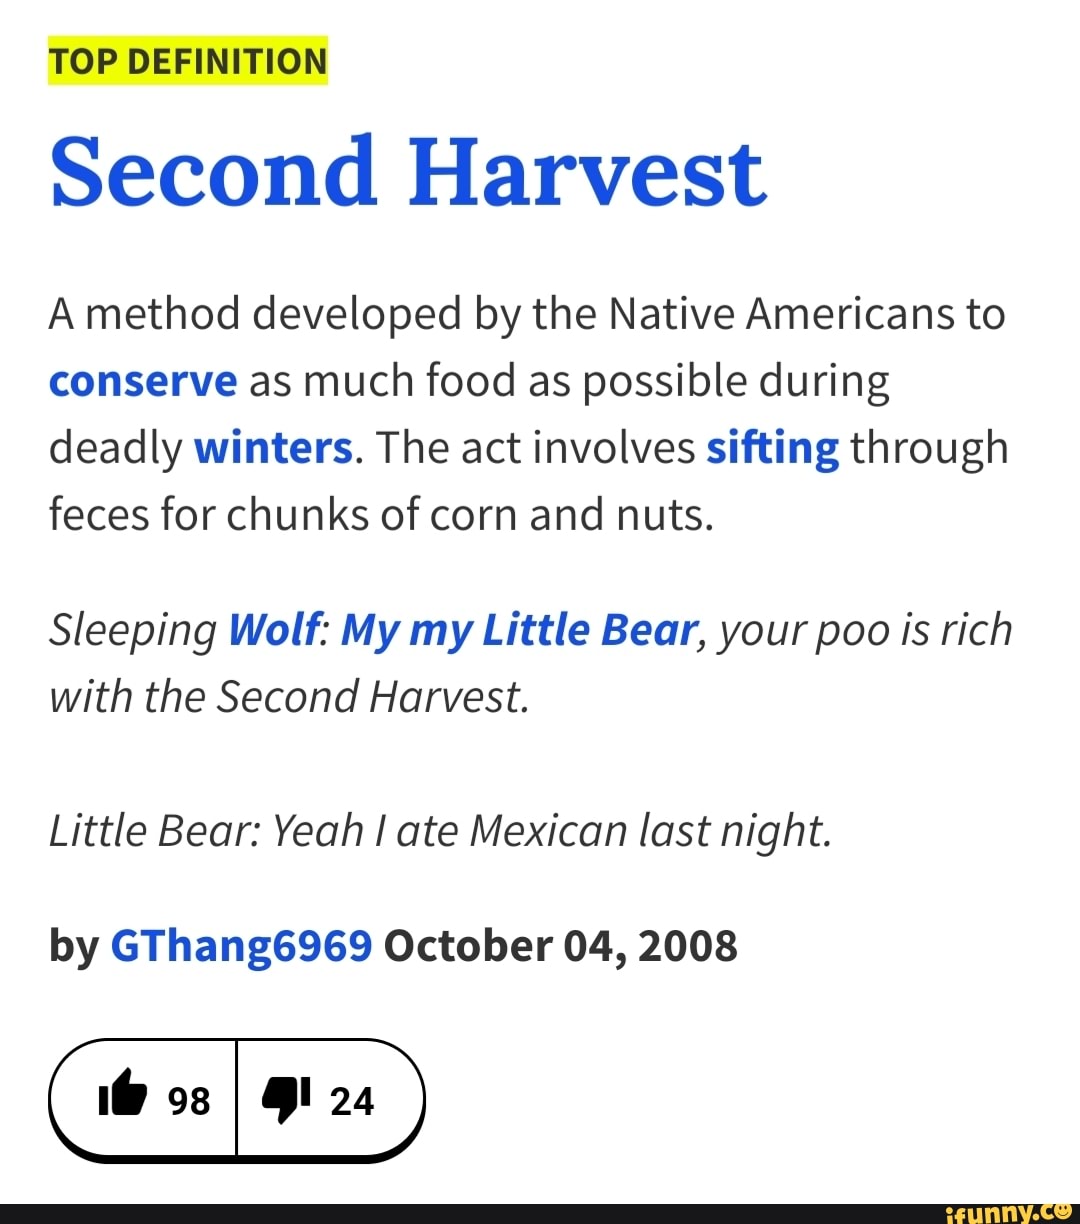 inhumane harvest meaning